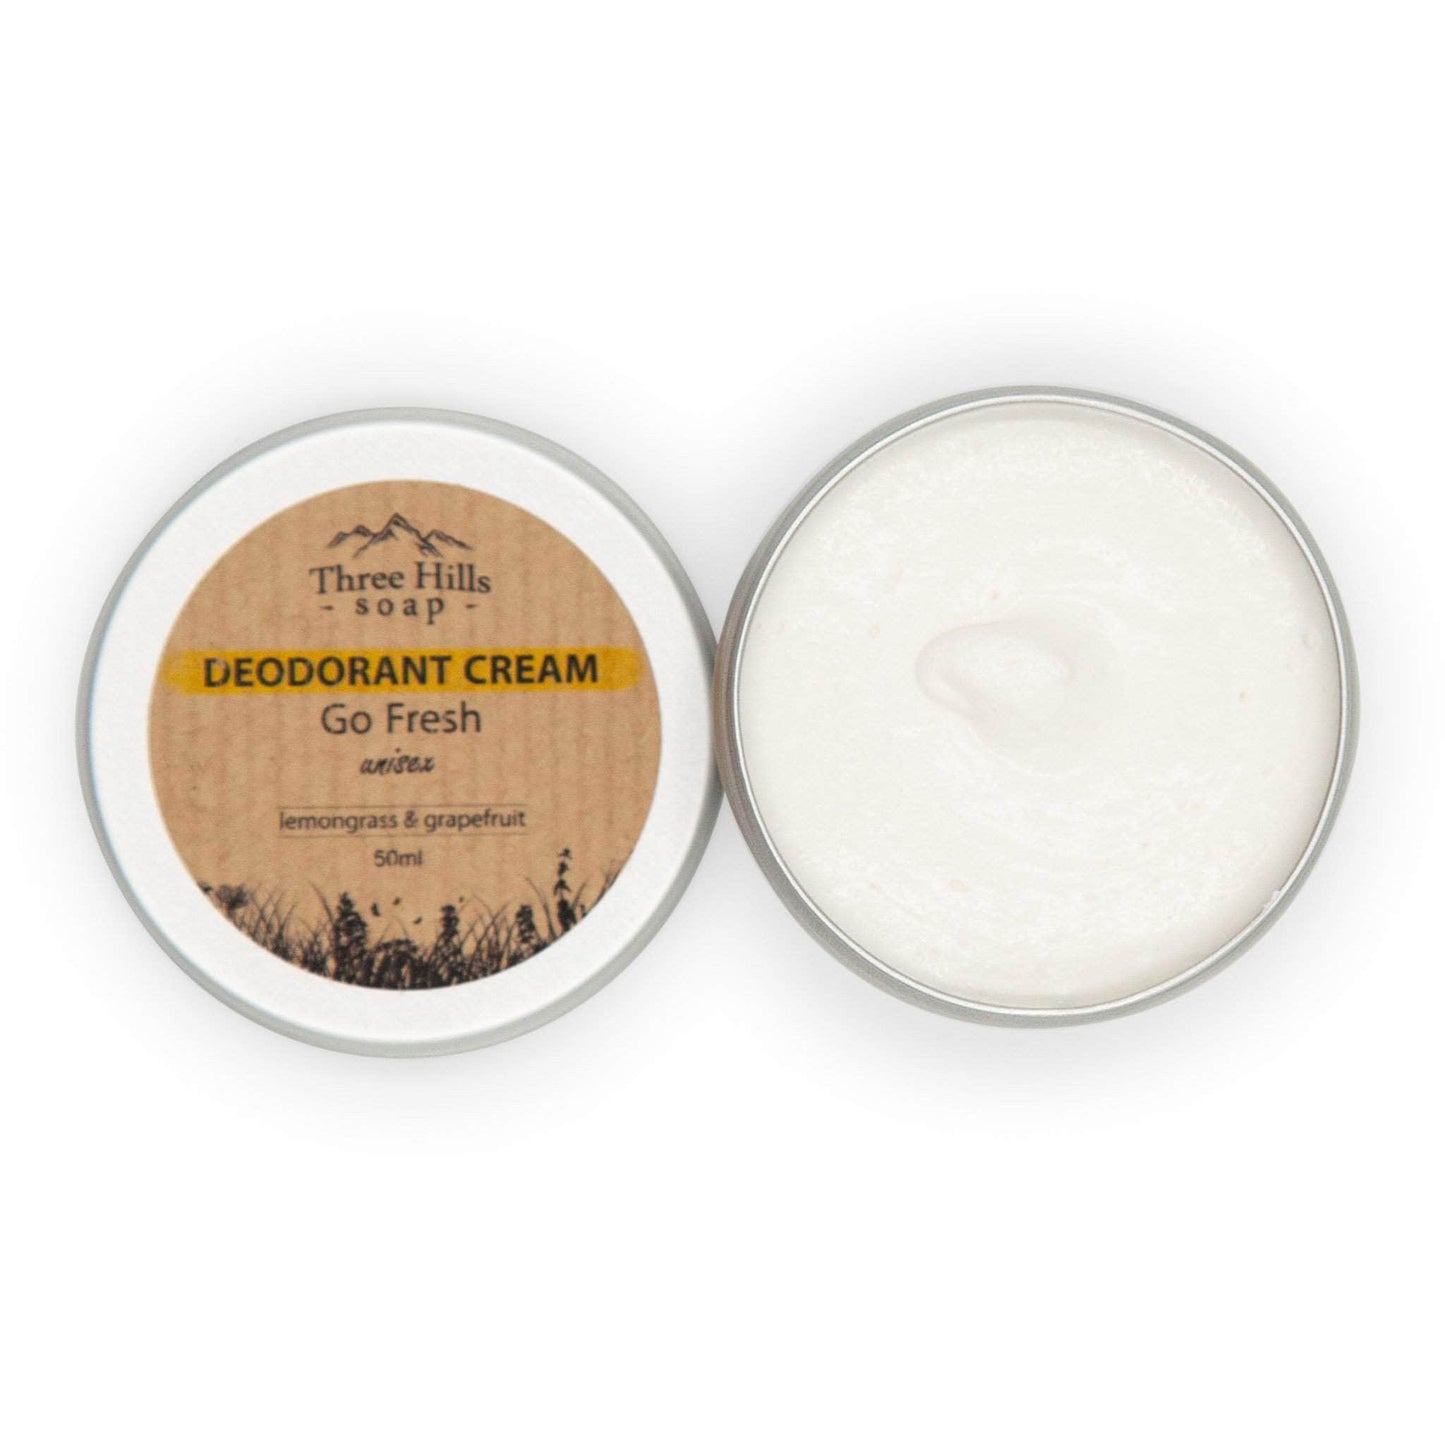 Three Hill Soaps Deodorant Three Hills - Deodorant Cream “Go Fresh”